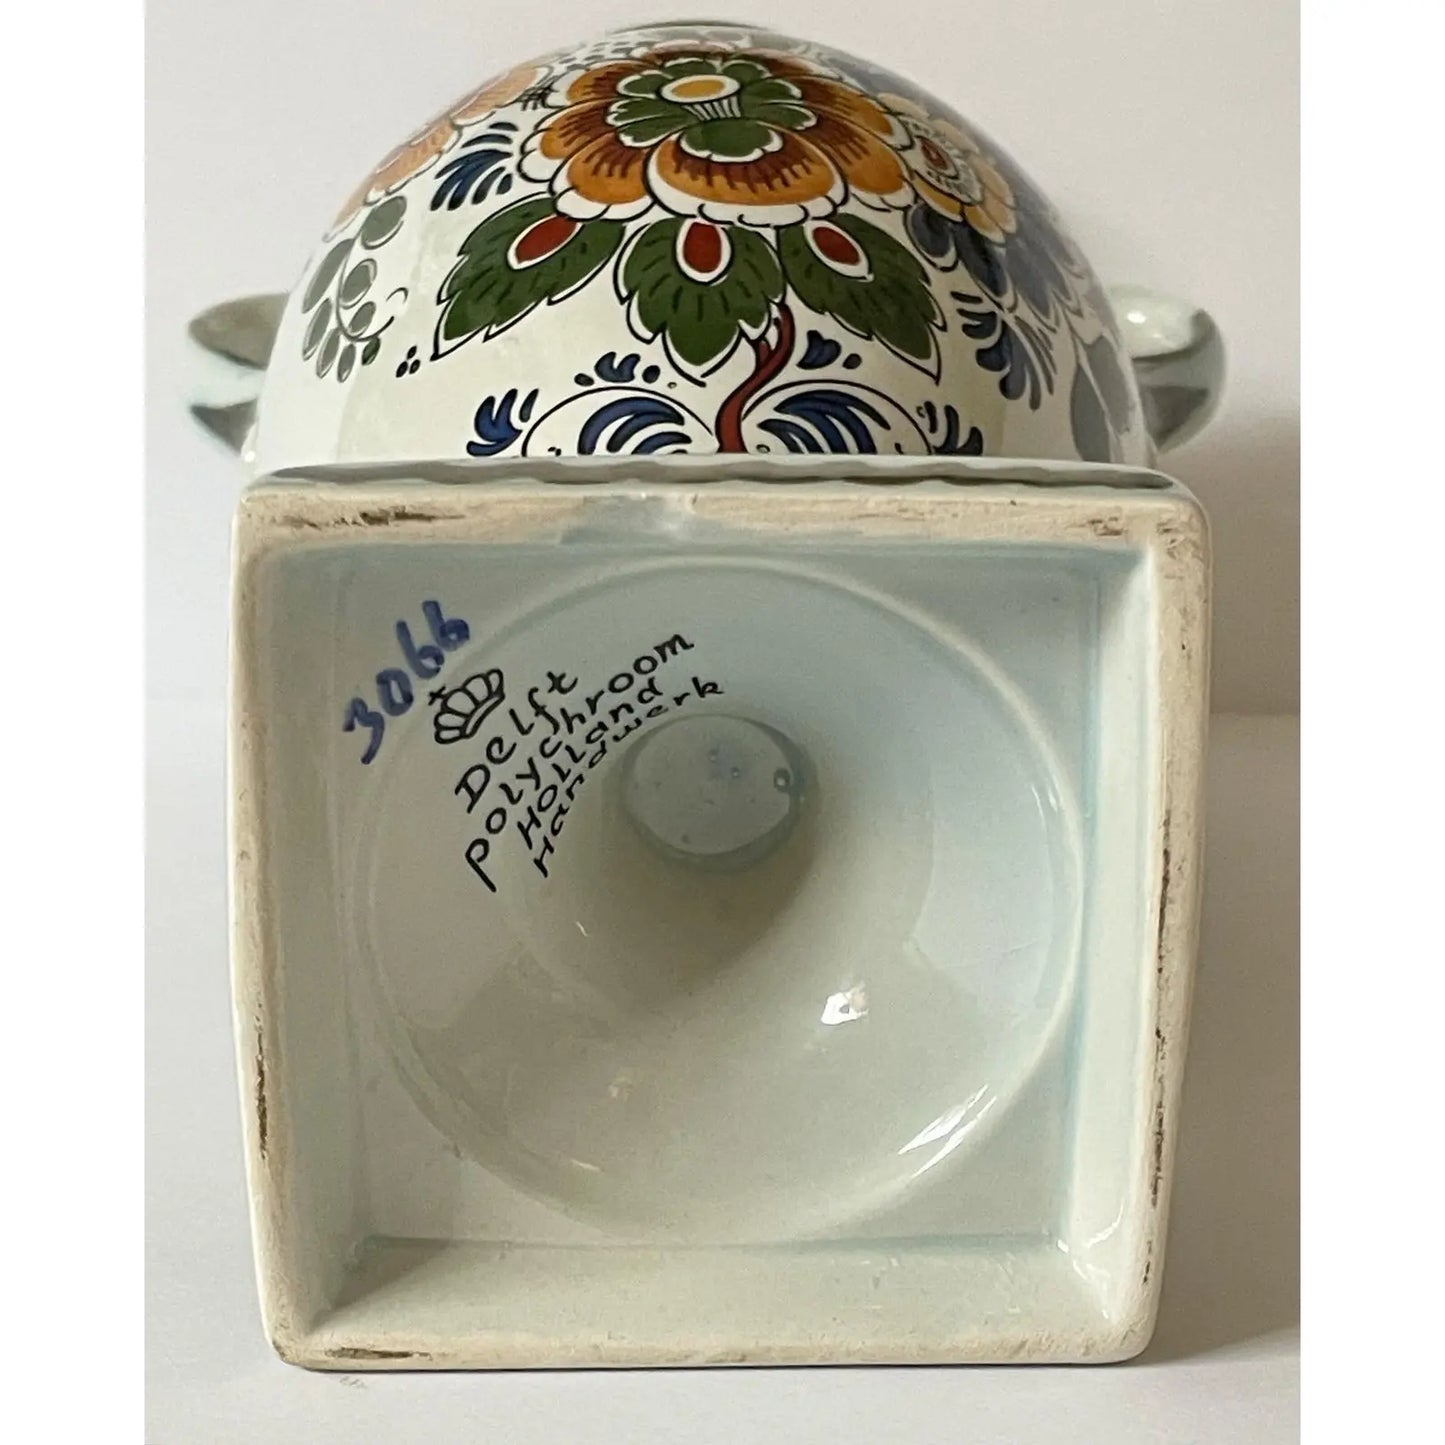 Dutch Delft Polychrome Vase